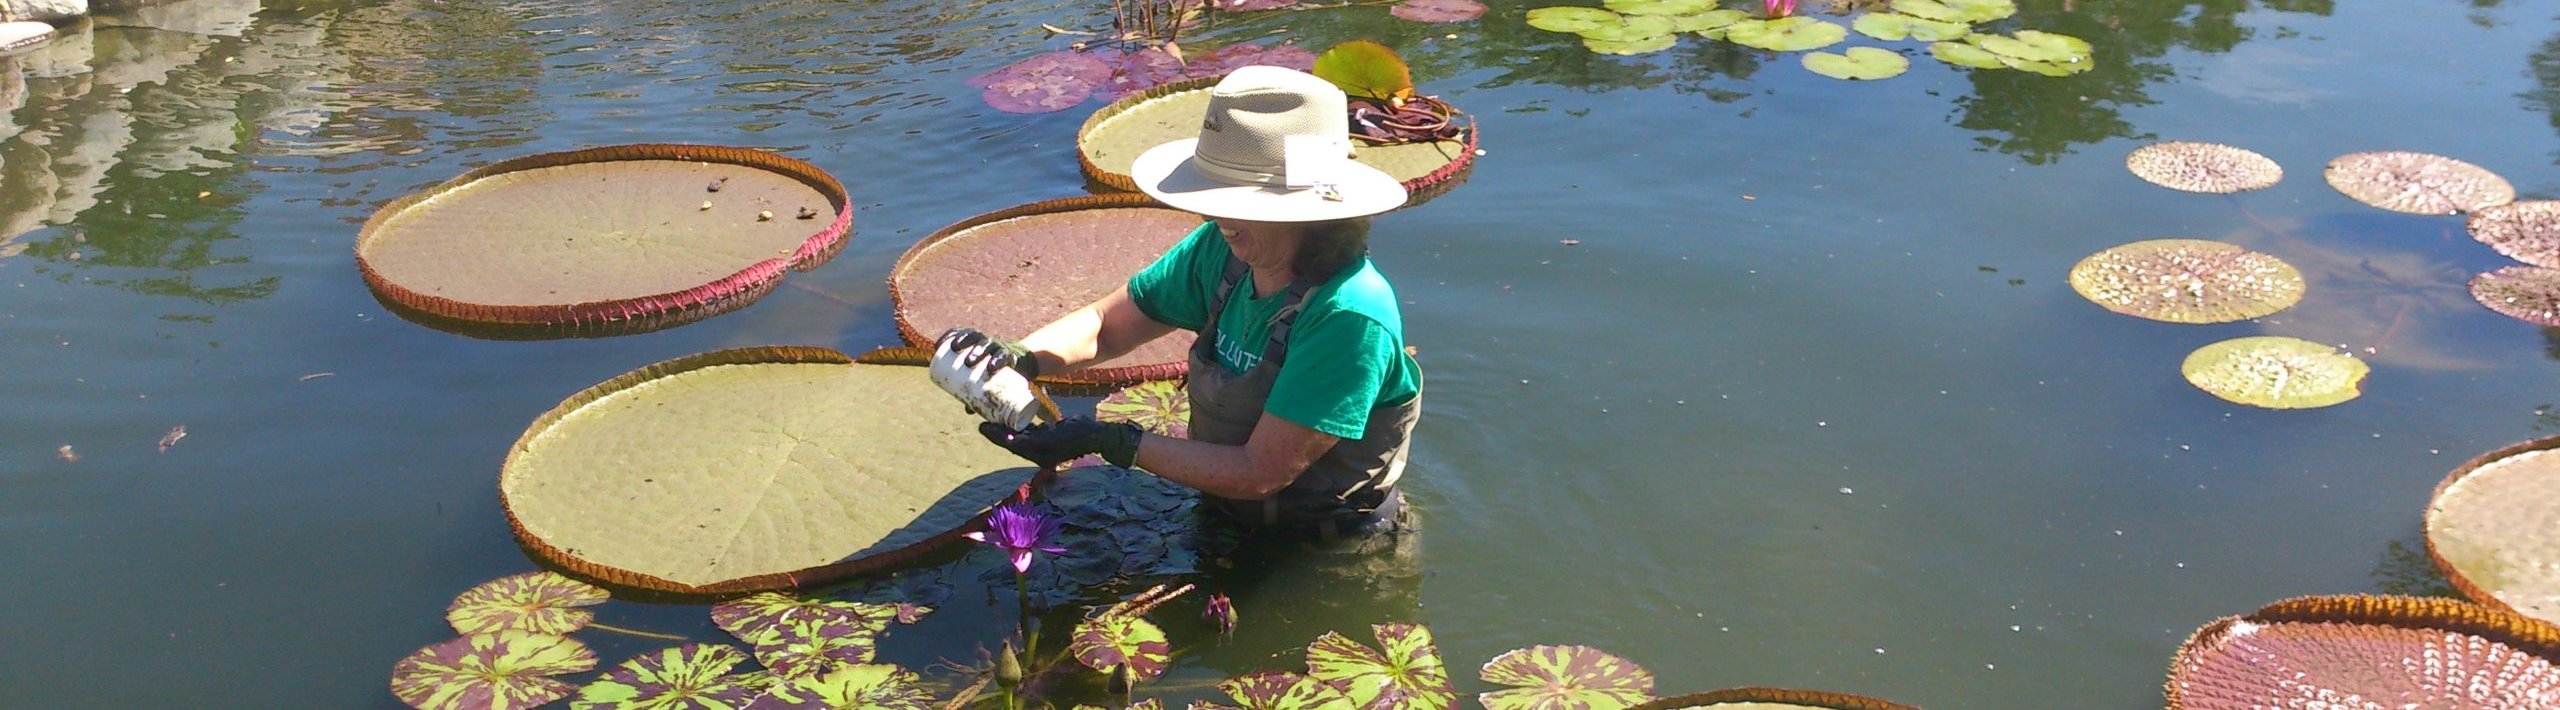 A volunteer water gardener applying fertilizer to a water lilly.